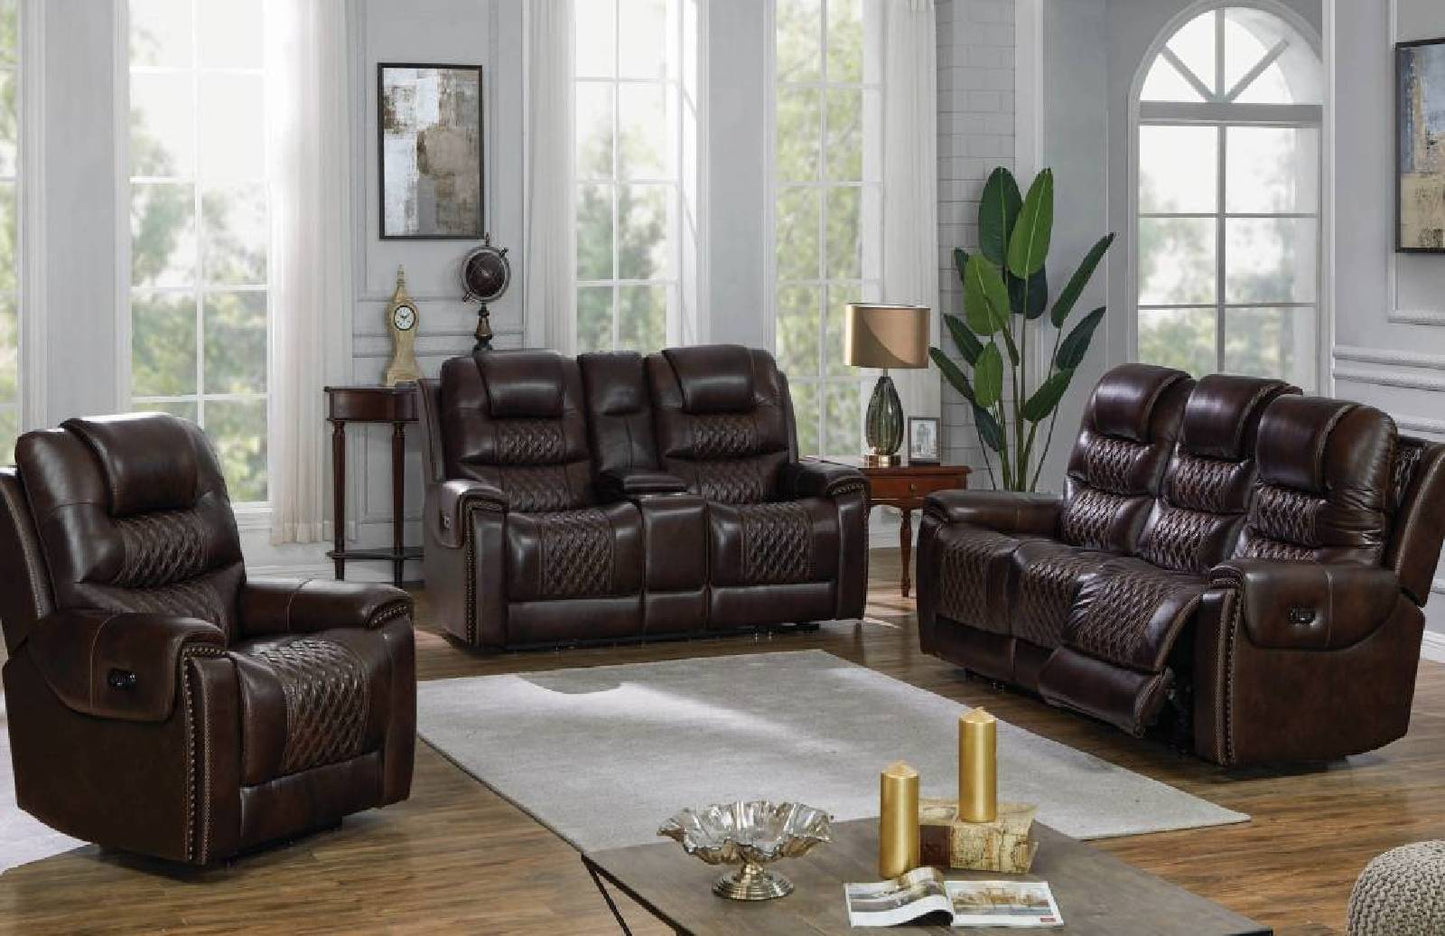 North Upholstered Tufted Living Room Set - 650401PP